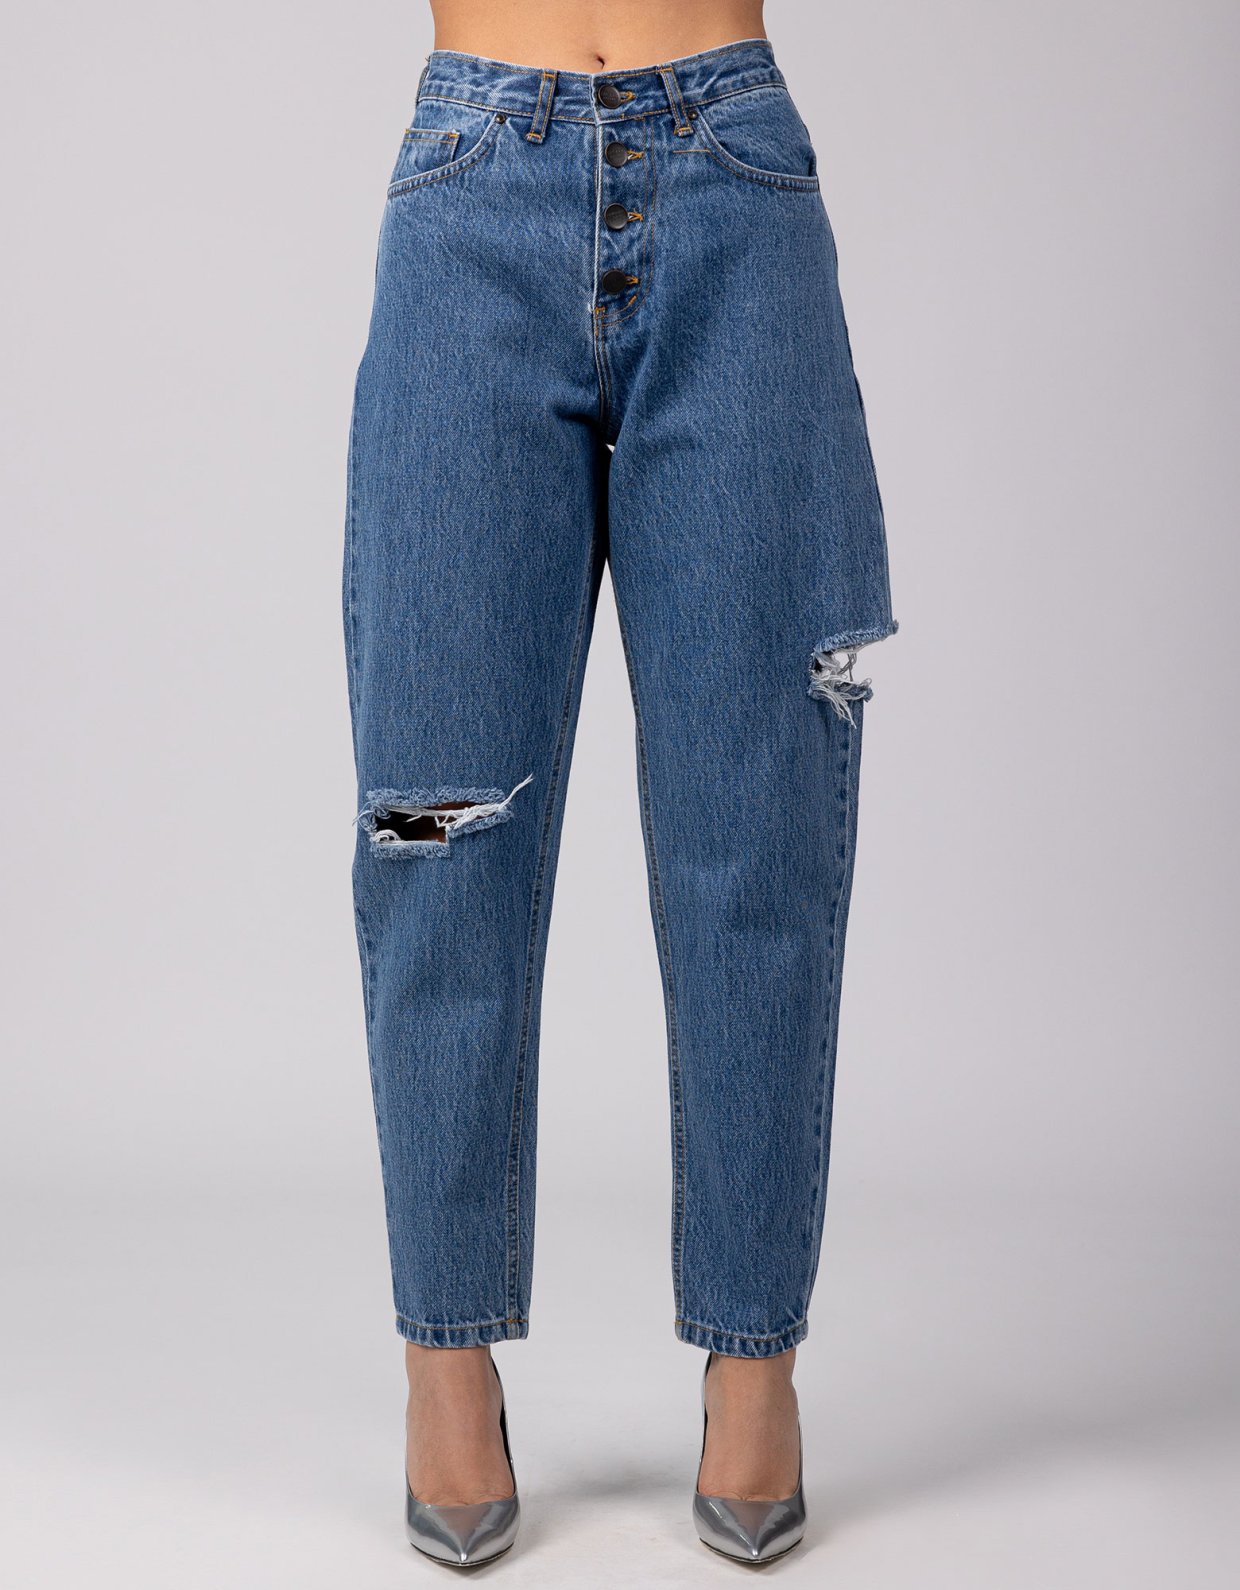 Sac & CO Jeans Domenica denim pants dark blue